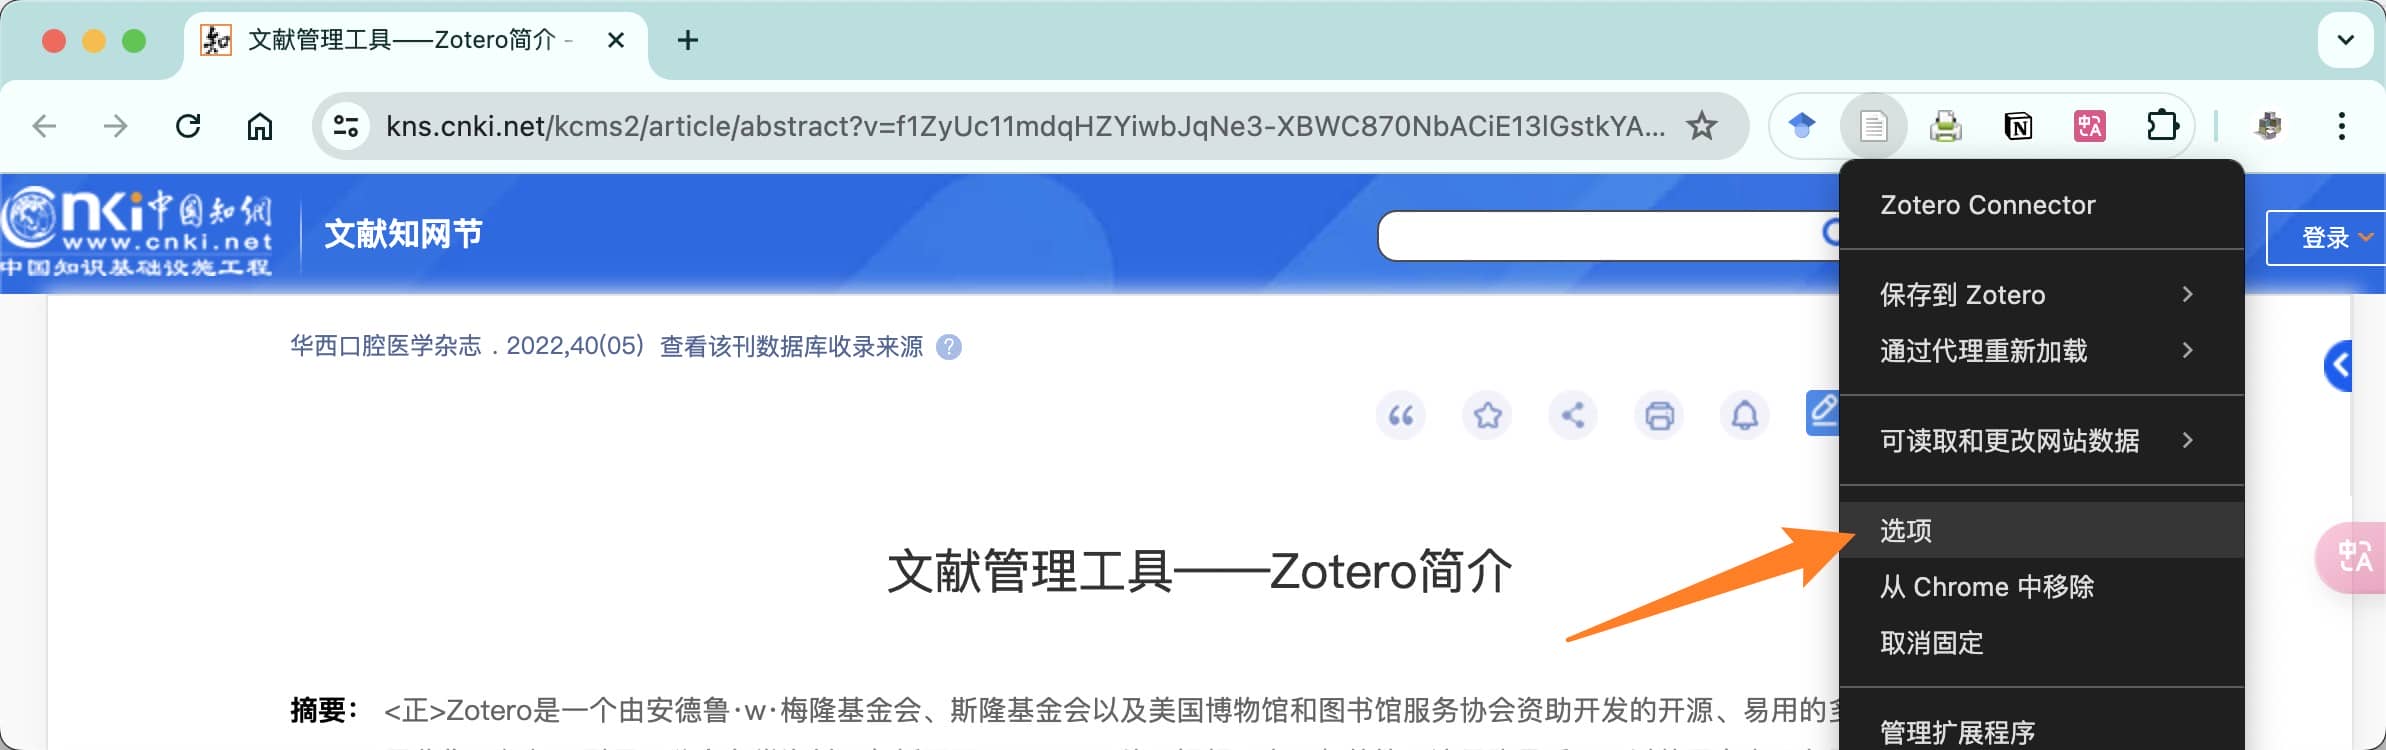 打开 Zotero Connector 的选项